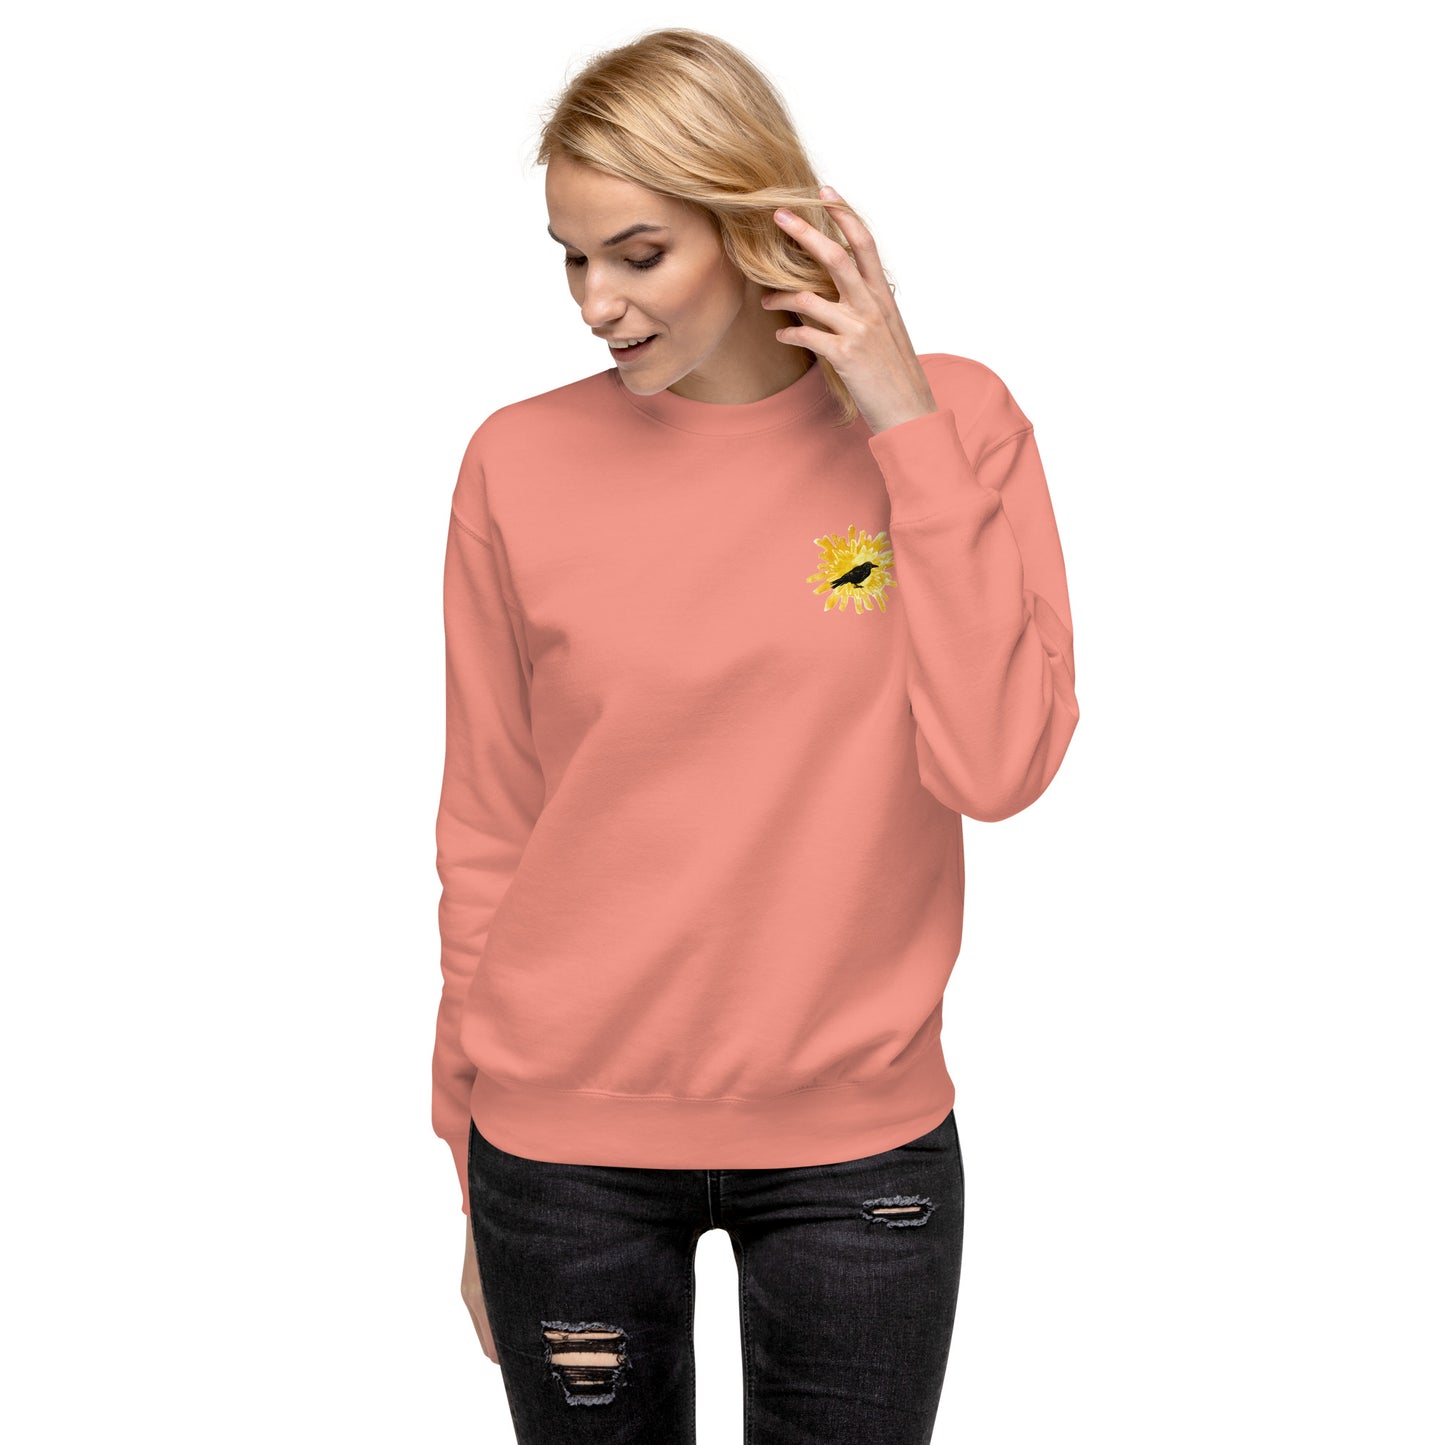 Watercolour Cougar Unisex Sweatshirt